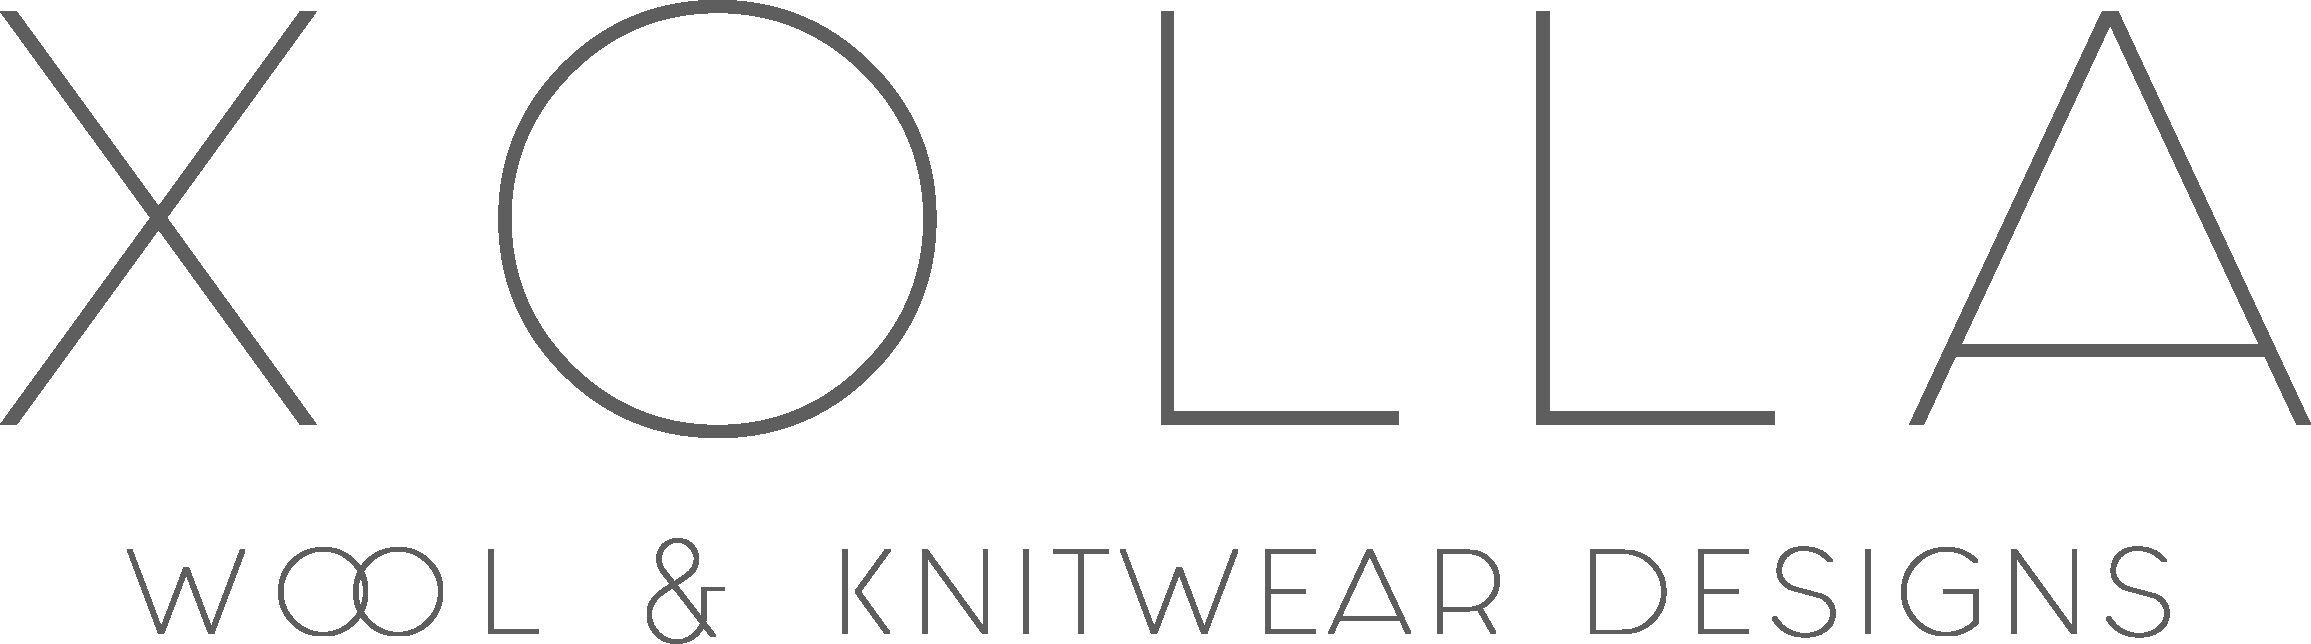 Xolla Wool & Knitwear Design